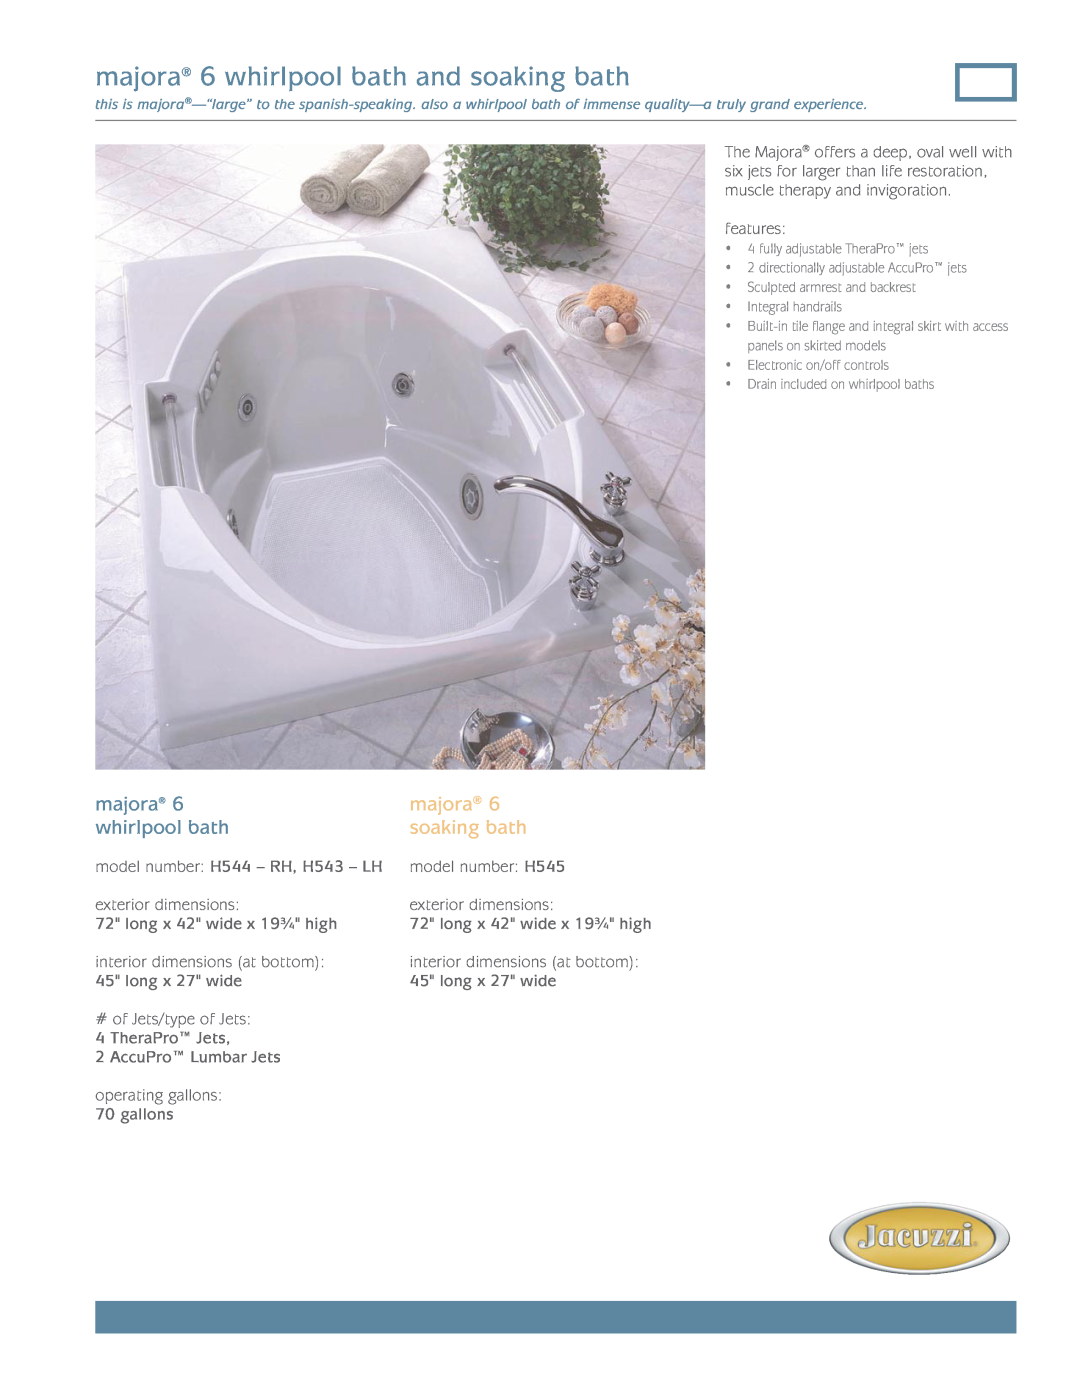 Jacuzzi FR66 dimensions majora 6 whirlpool bath and soaking bath 